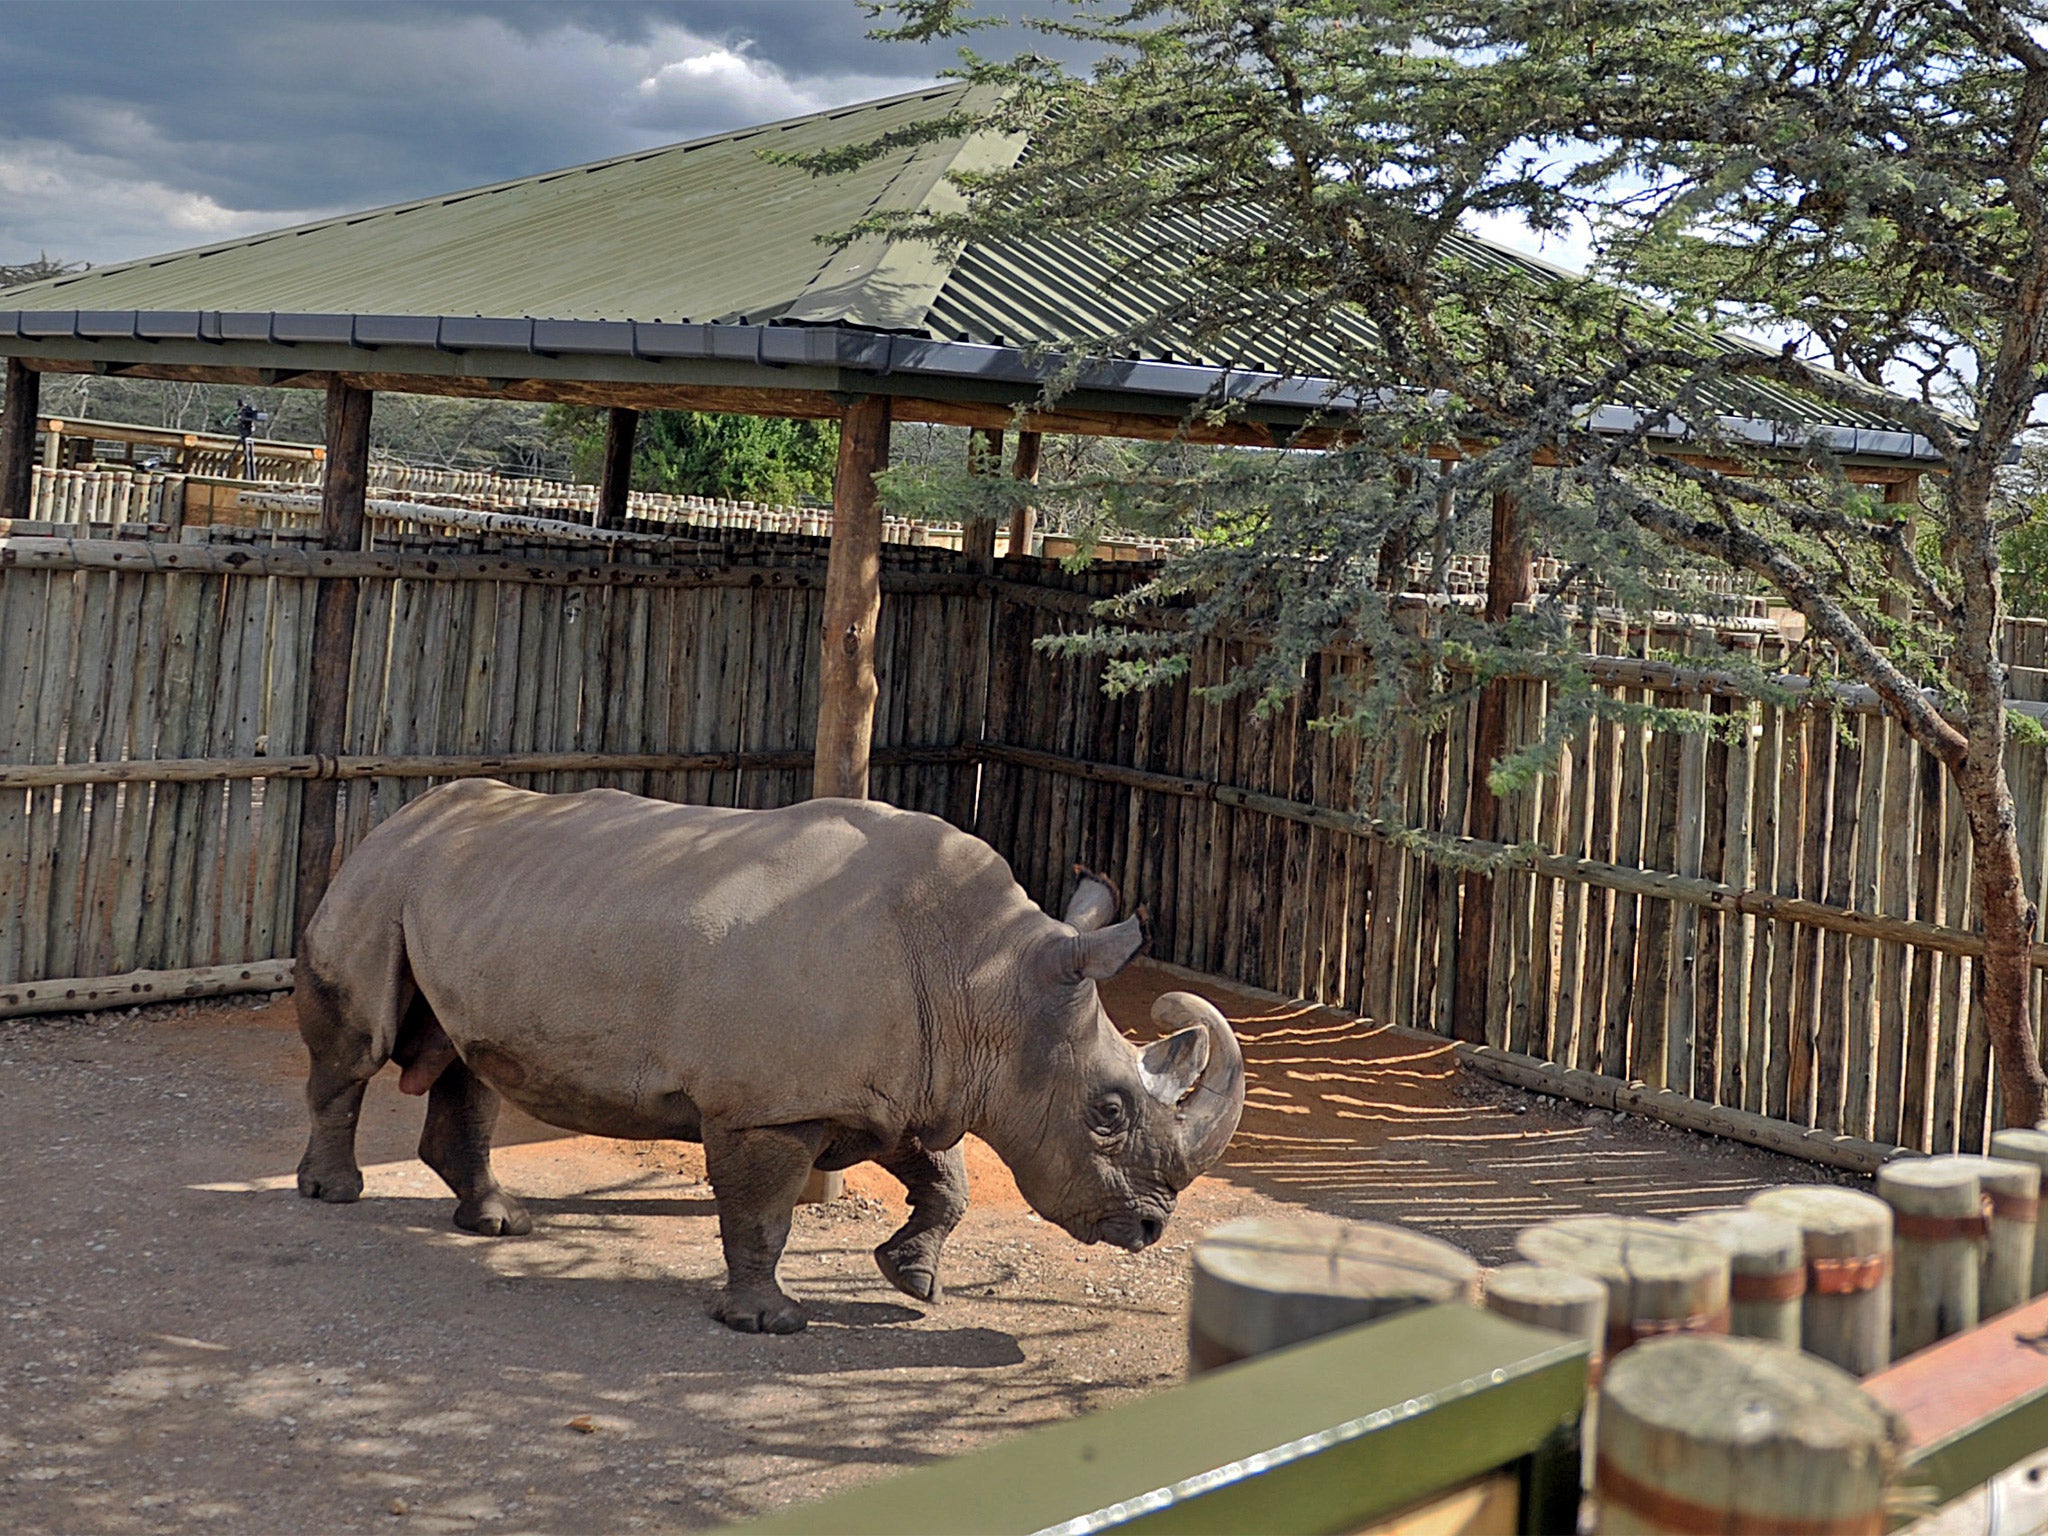 Sudan, the last male northern white rhino